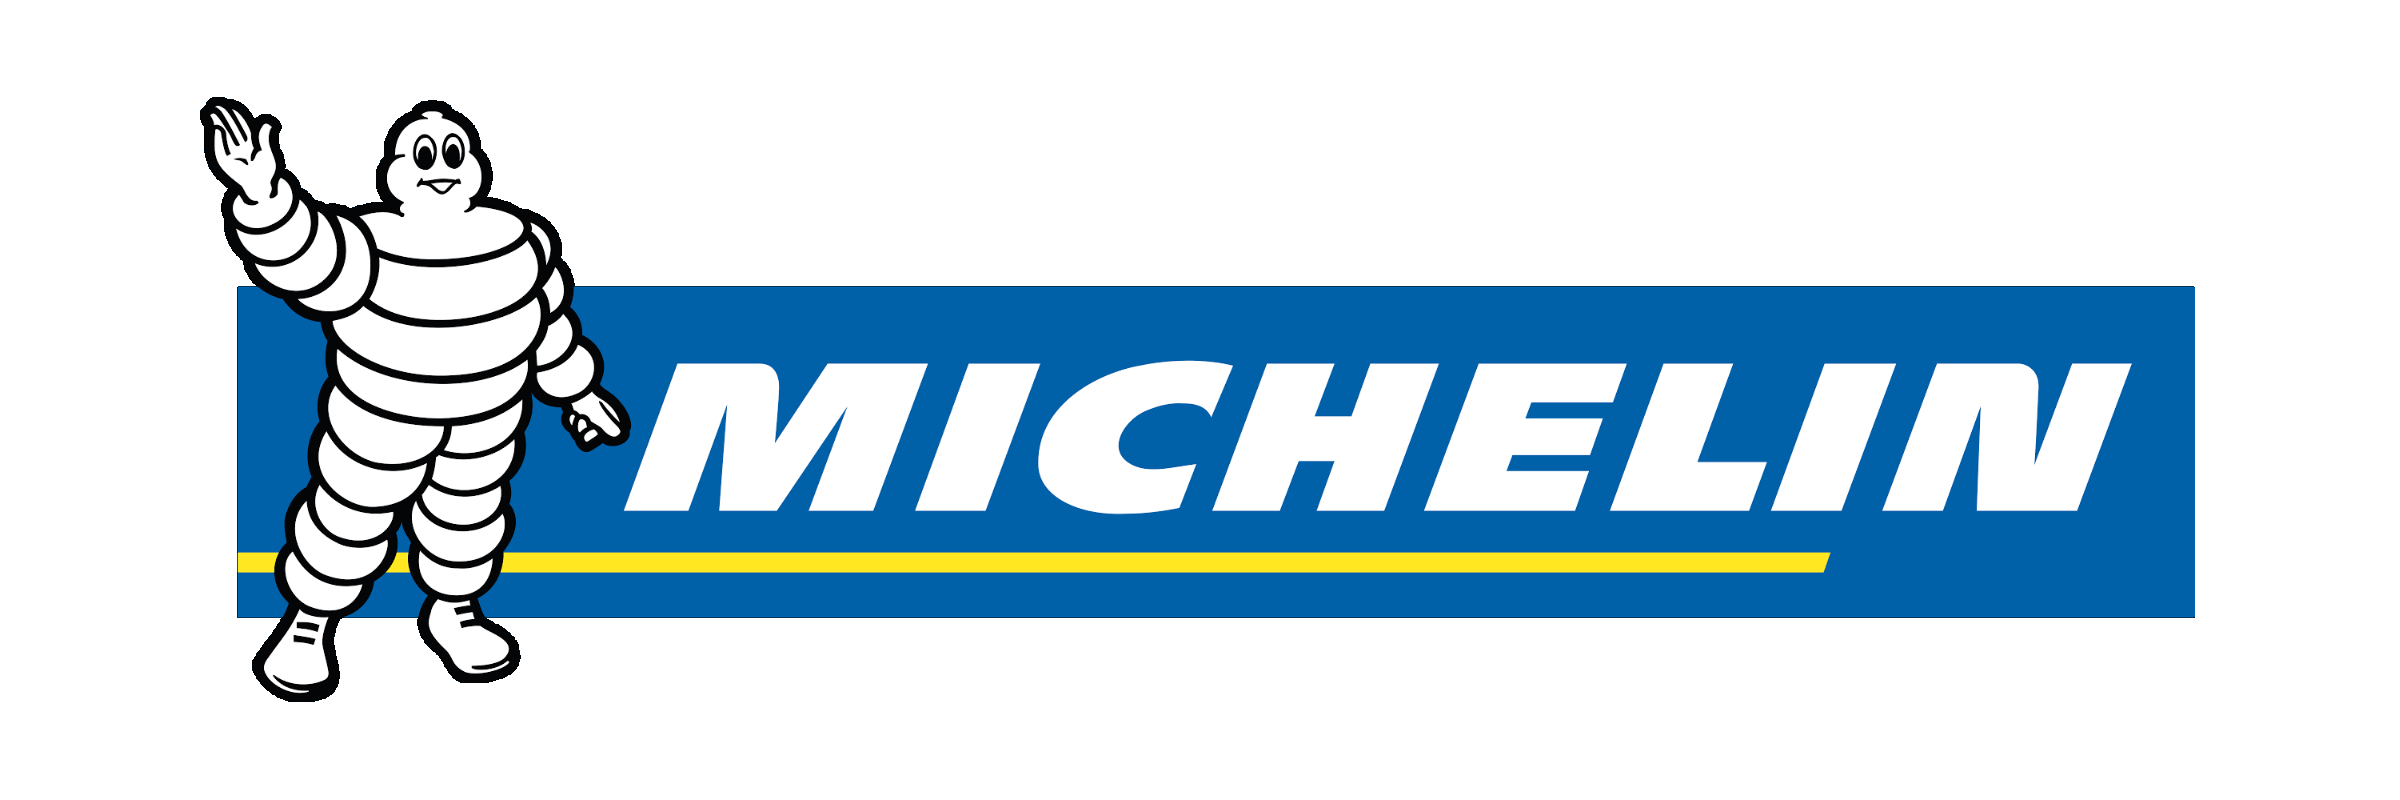 Michelin Logo PNG - 179519